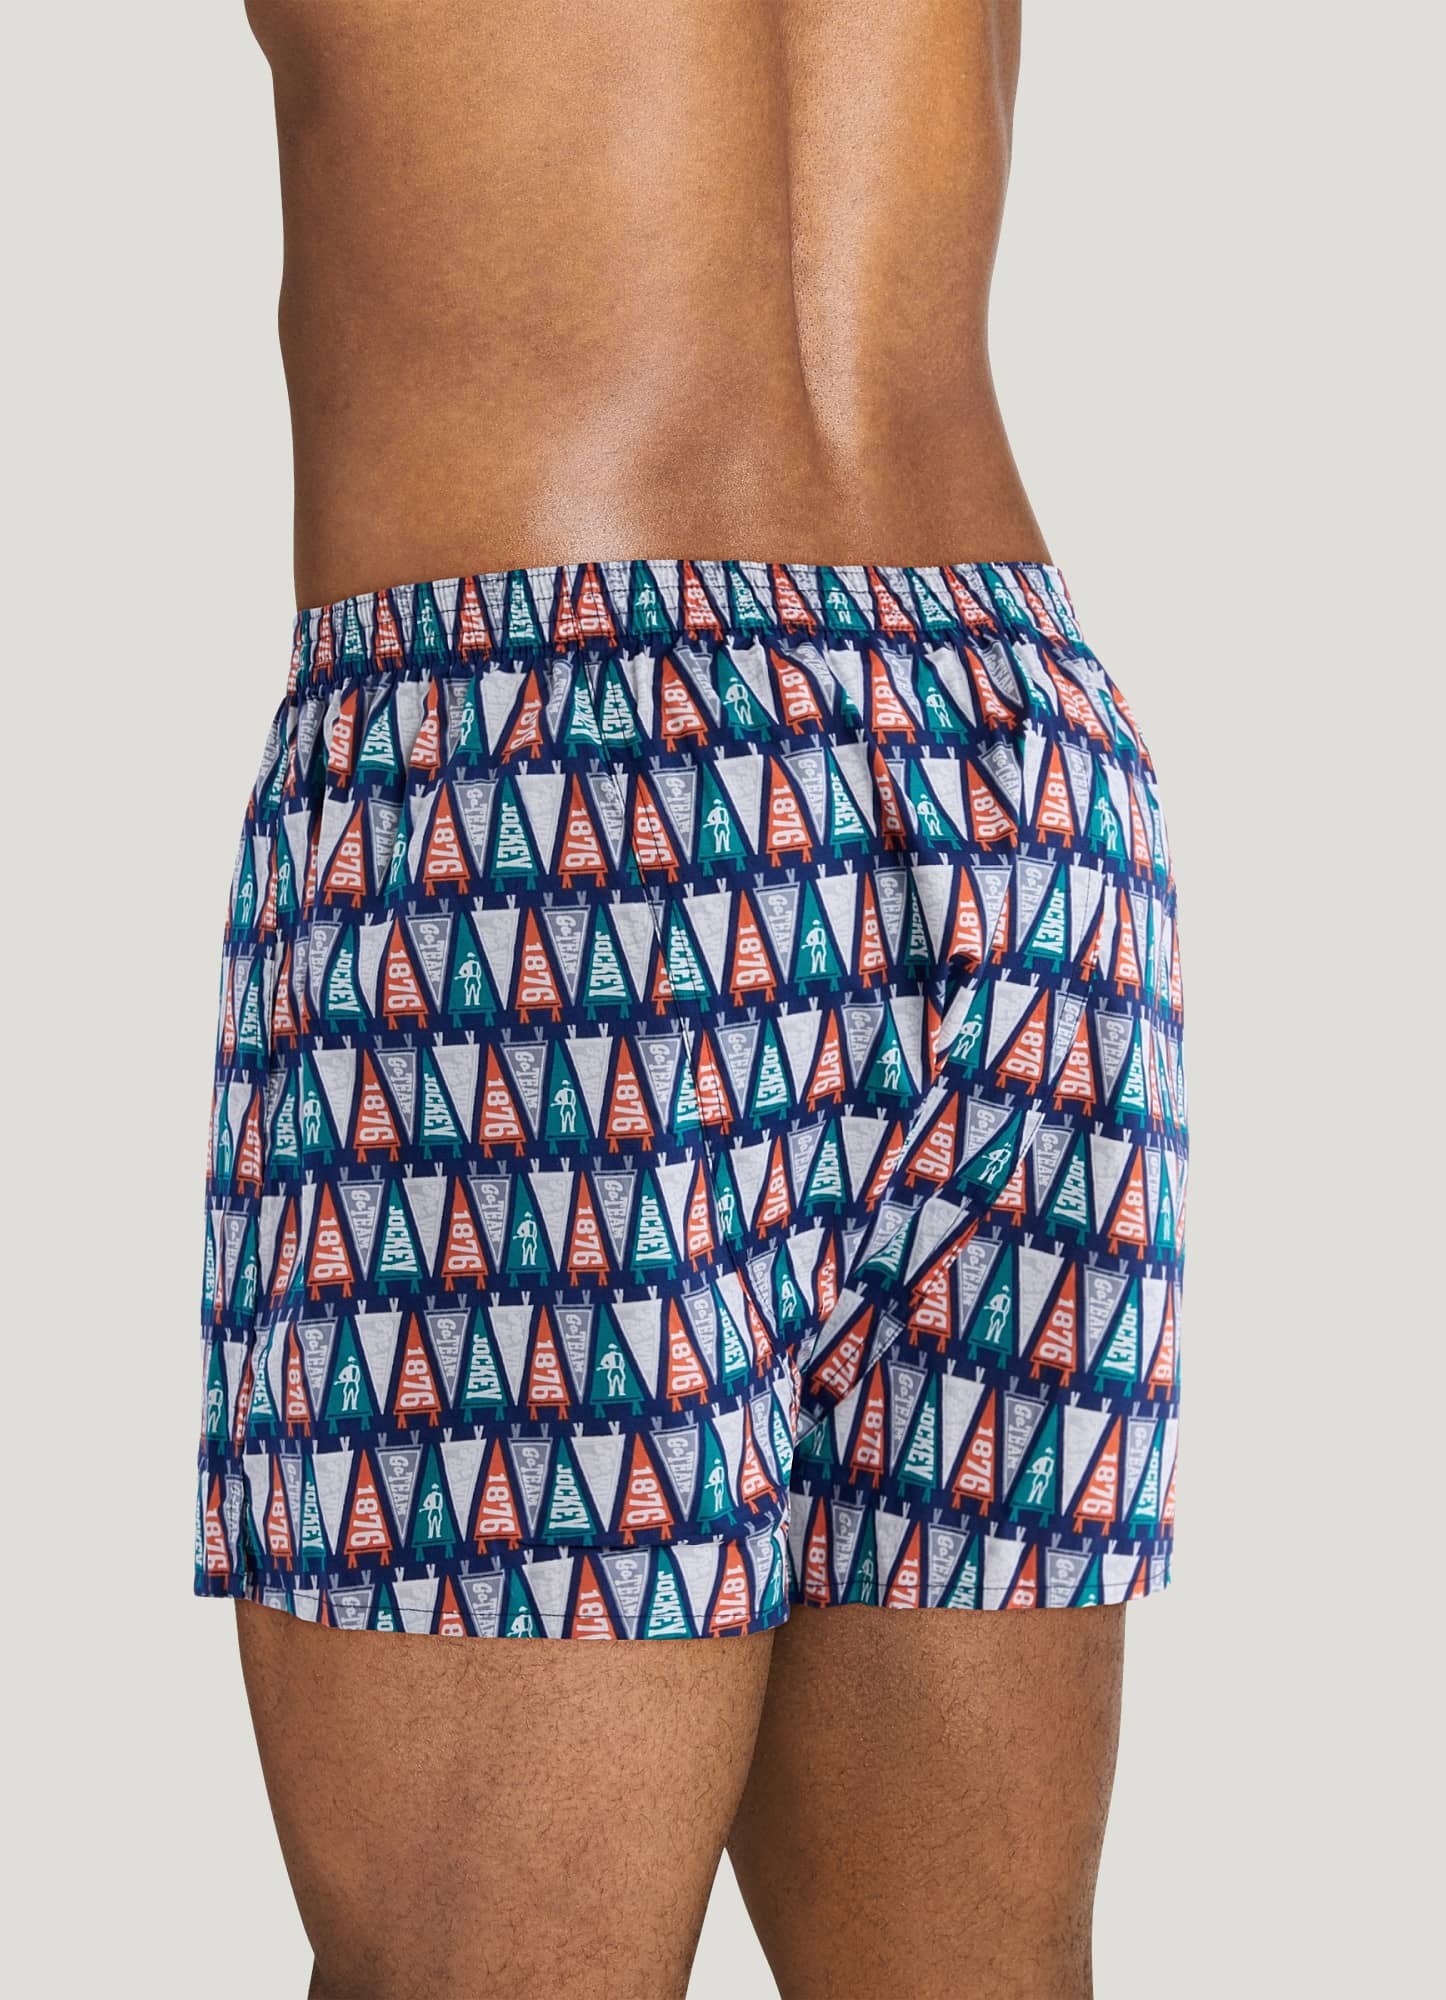 Jockey Men's Underwear Lightweight Cotton Blend Brief - 5 Pack, Azurite  Sea/Tropical Coral/Bayou Heather/Subtle Mint/Azurite Sea, S at  Men's  Clothing store